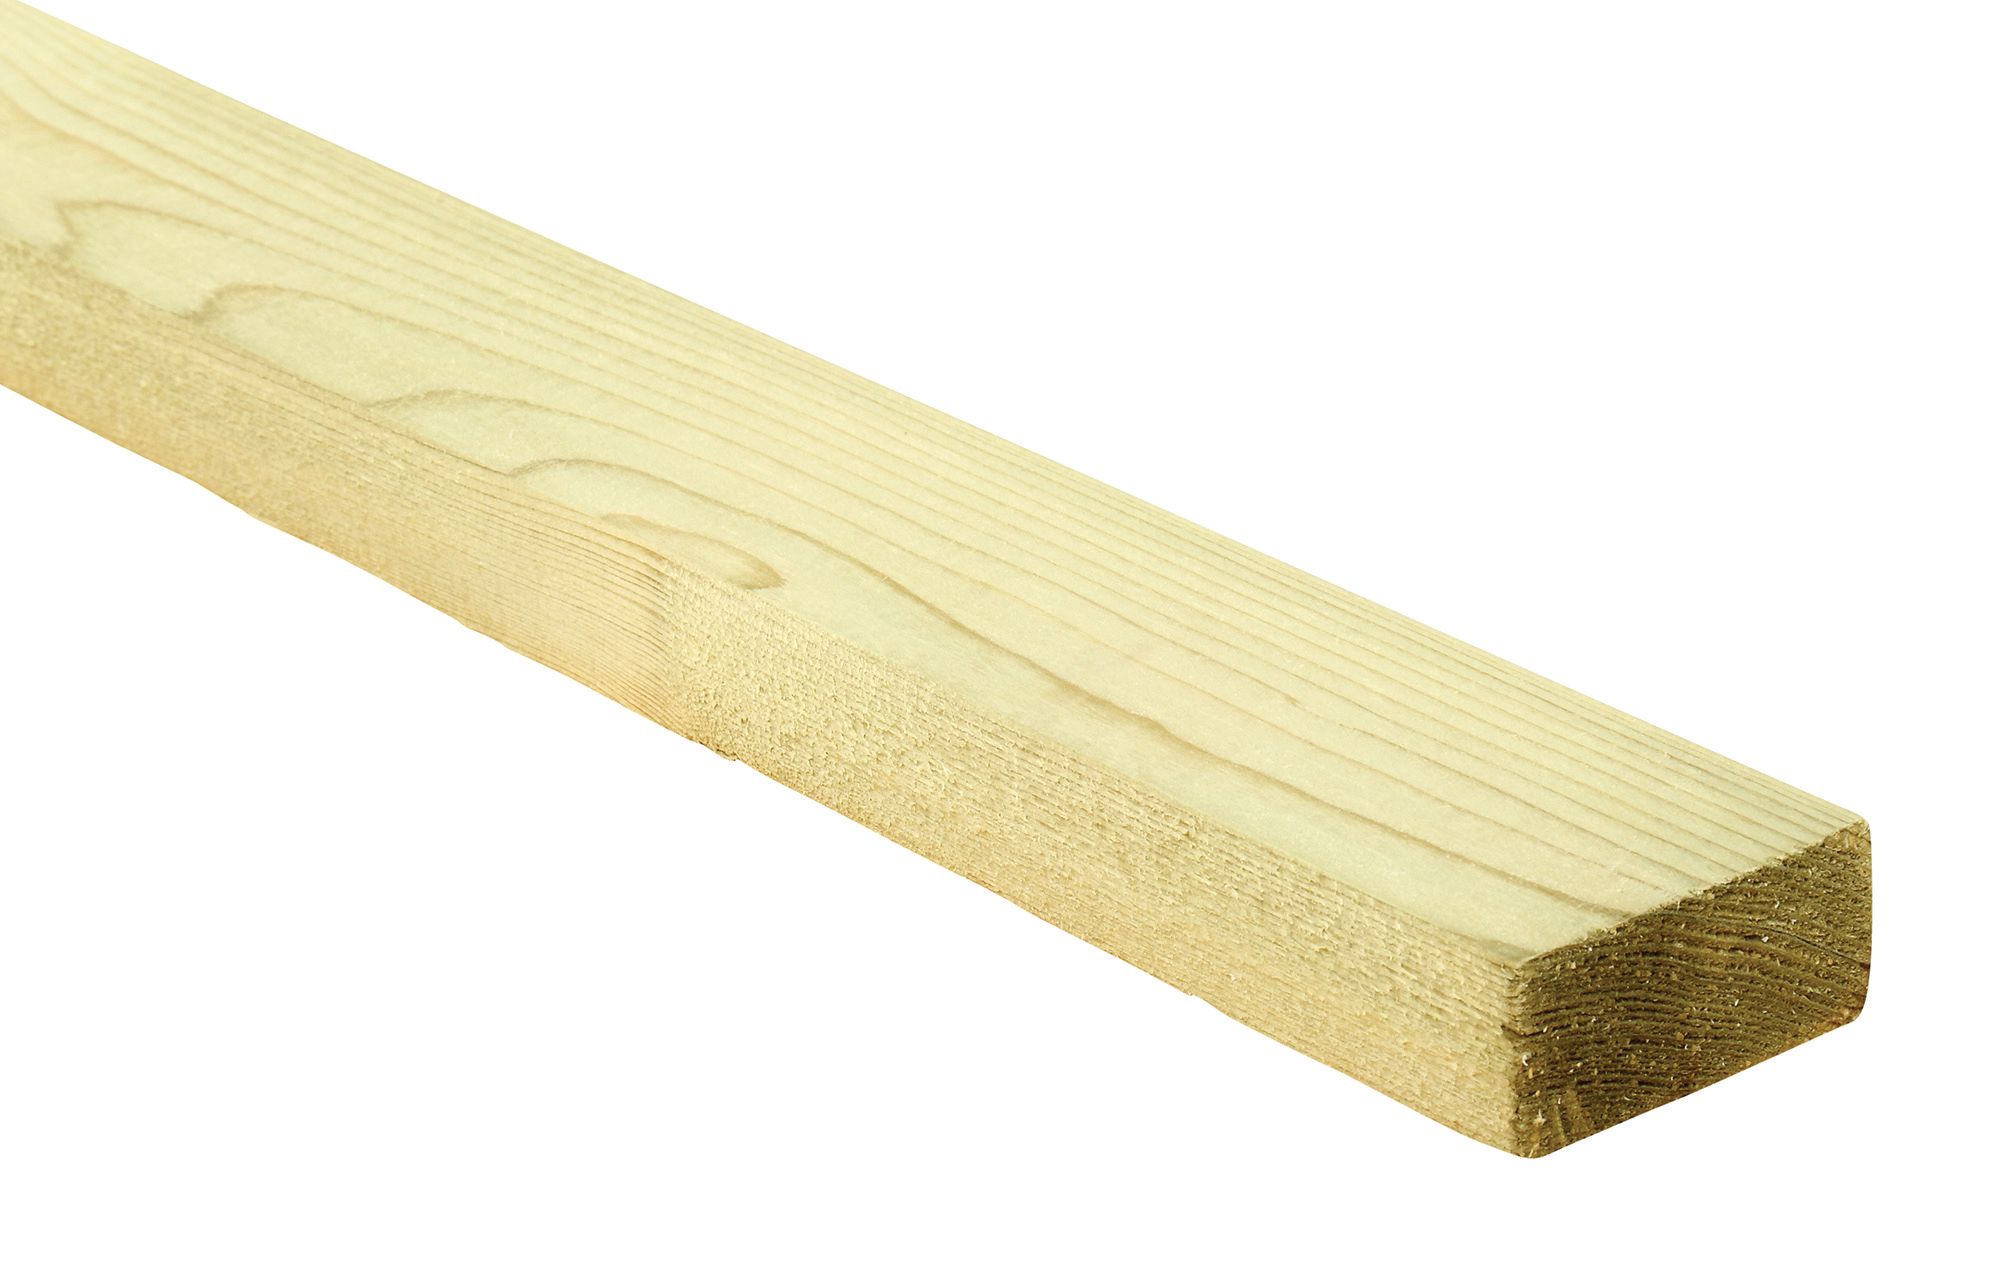 Wickes Treated Sawn Timber - 22 x 47 x 1800mm